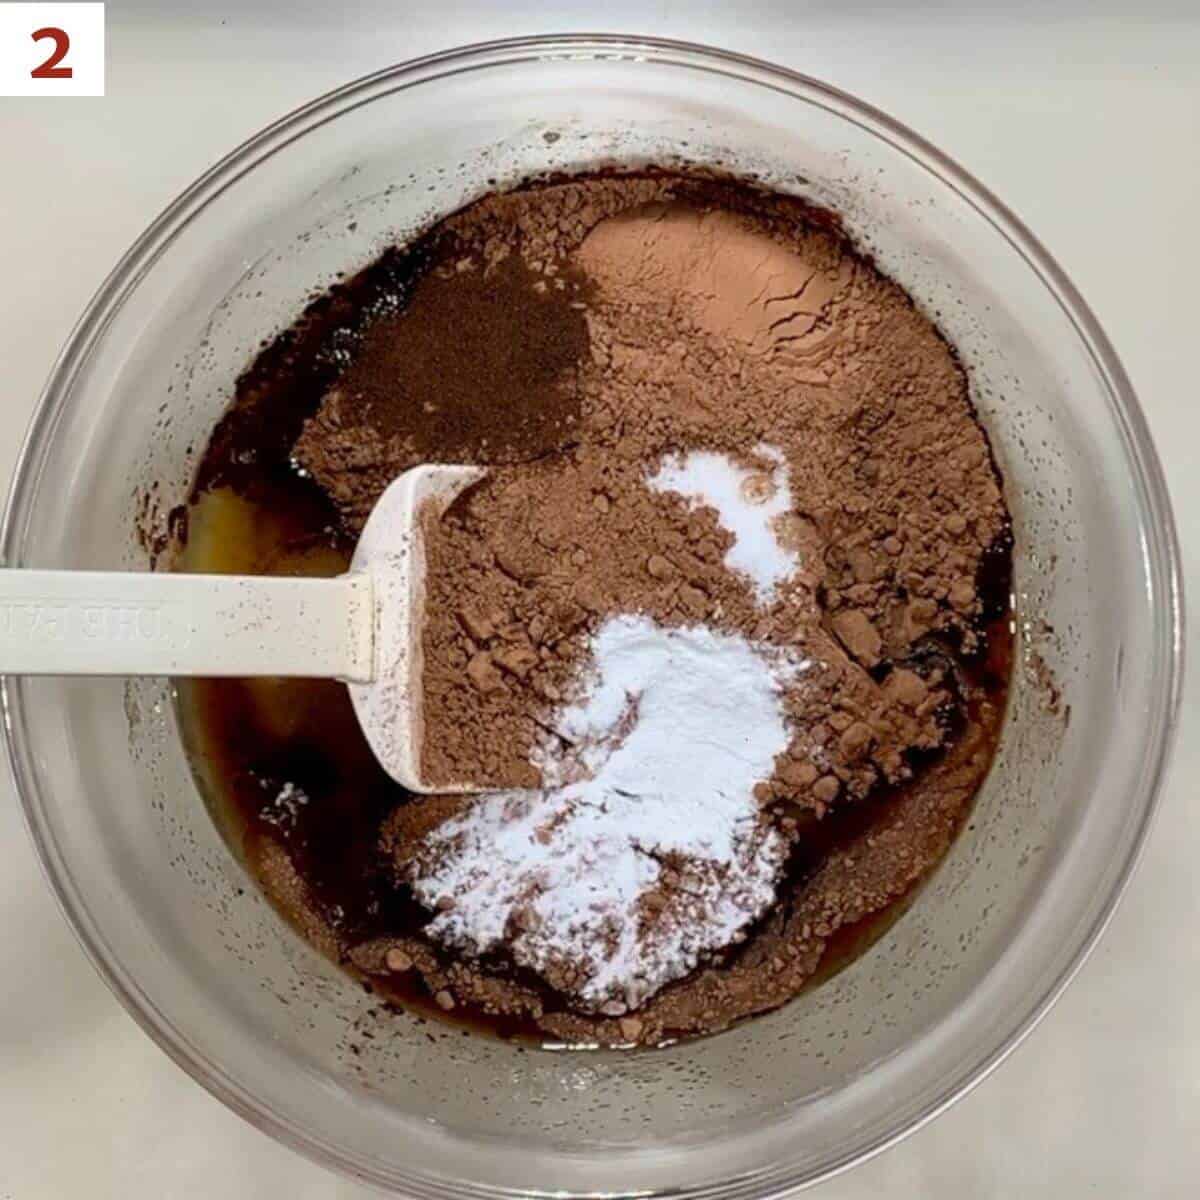 Adding Stir in the cocoa powder, vanilla, baking powder, espresso powder, and salt to the sugar mixture.